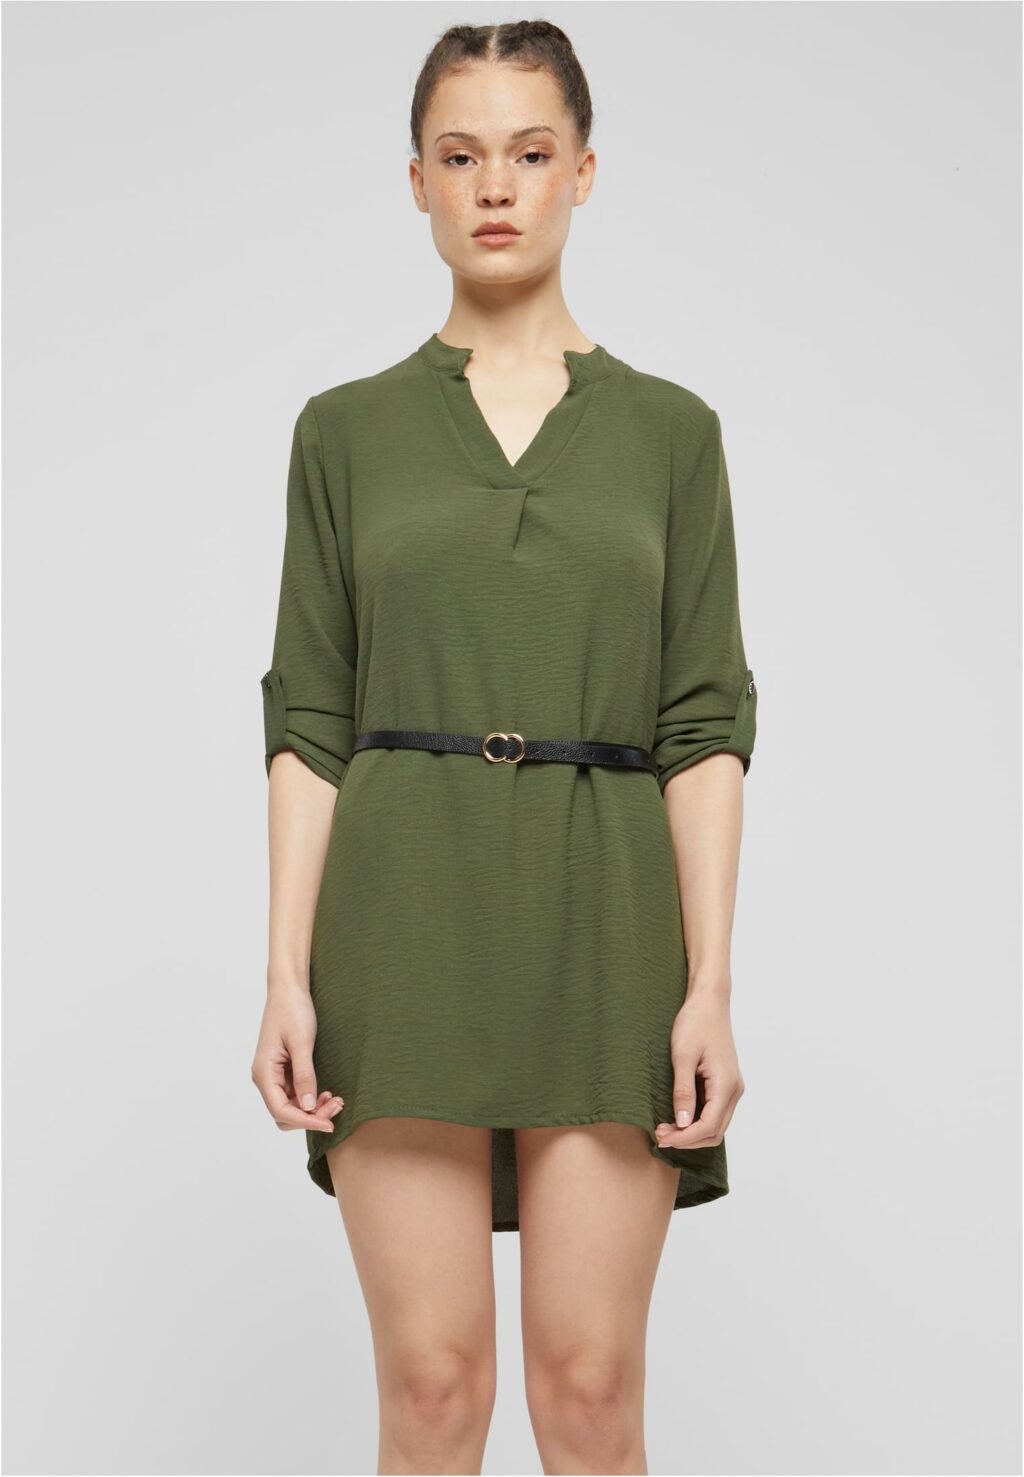 Cloud5ive Damen Longform Musselin Turn-Up Shirt mit Gürtel green 5126CL5